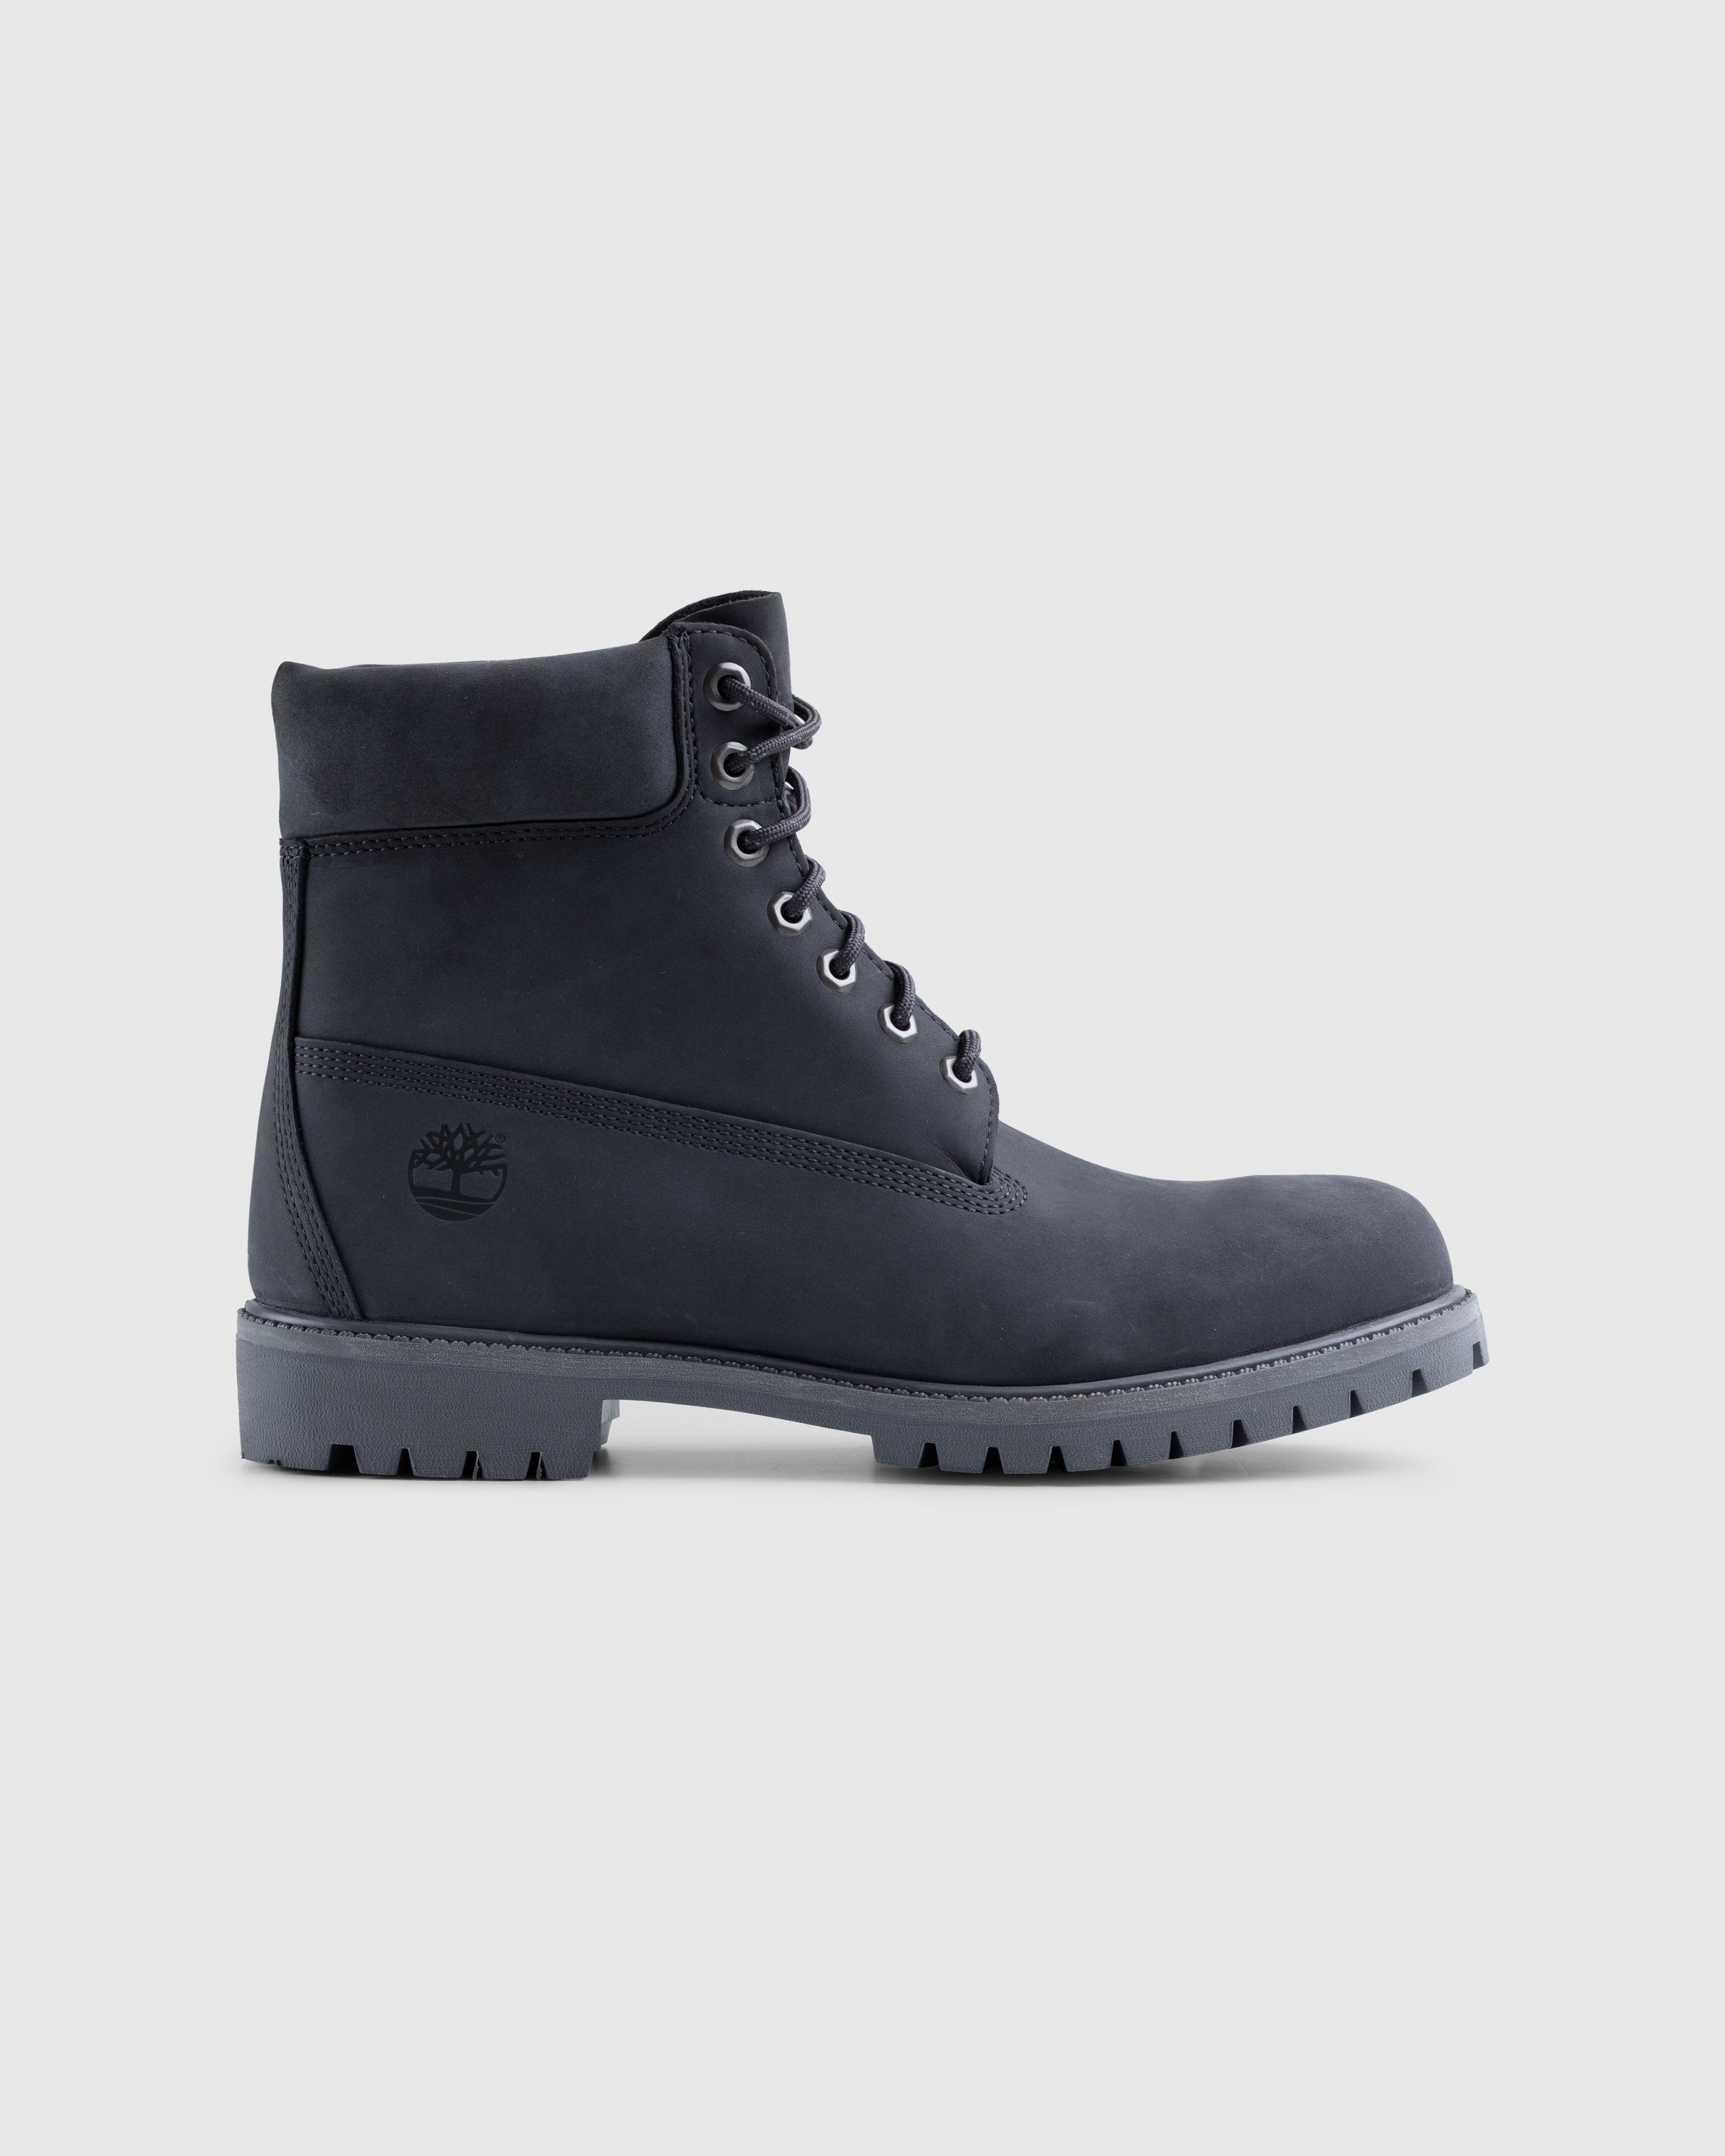 Timberland - 6 Inch Premium Boot Blackened Pearl - Footwear - Grey - Image 1